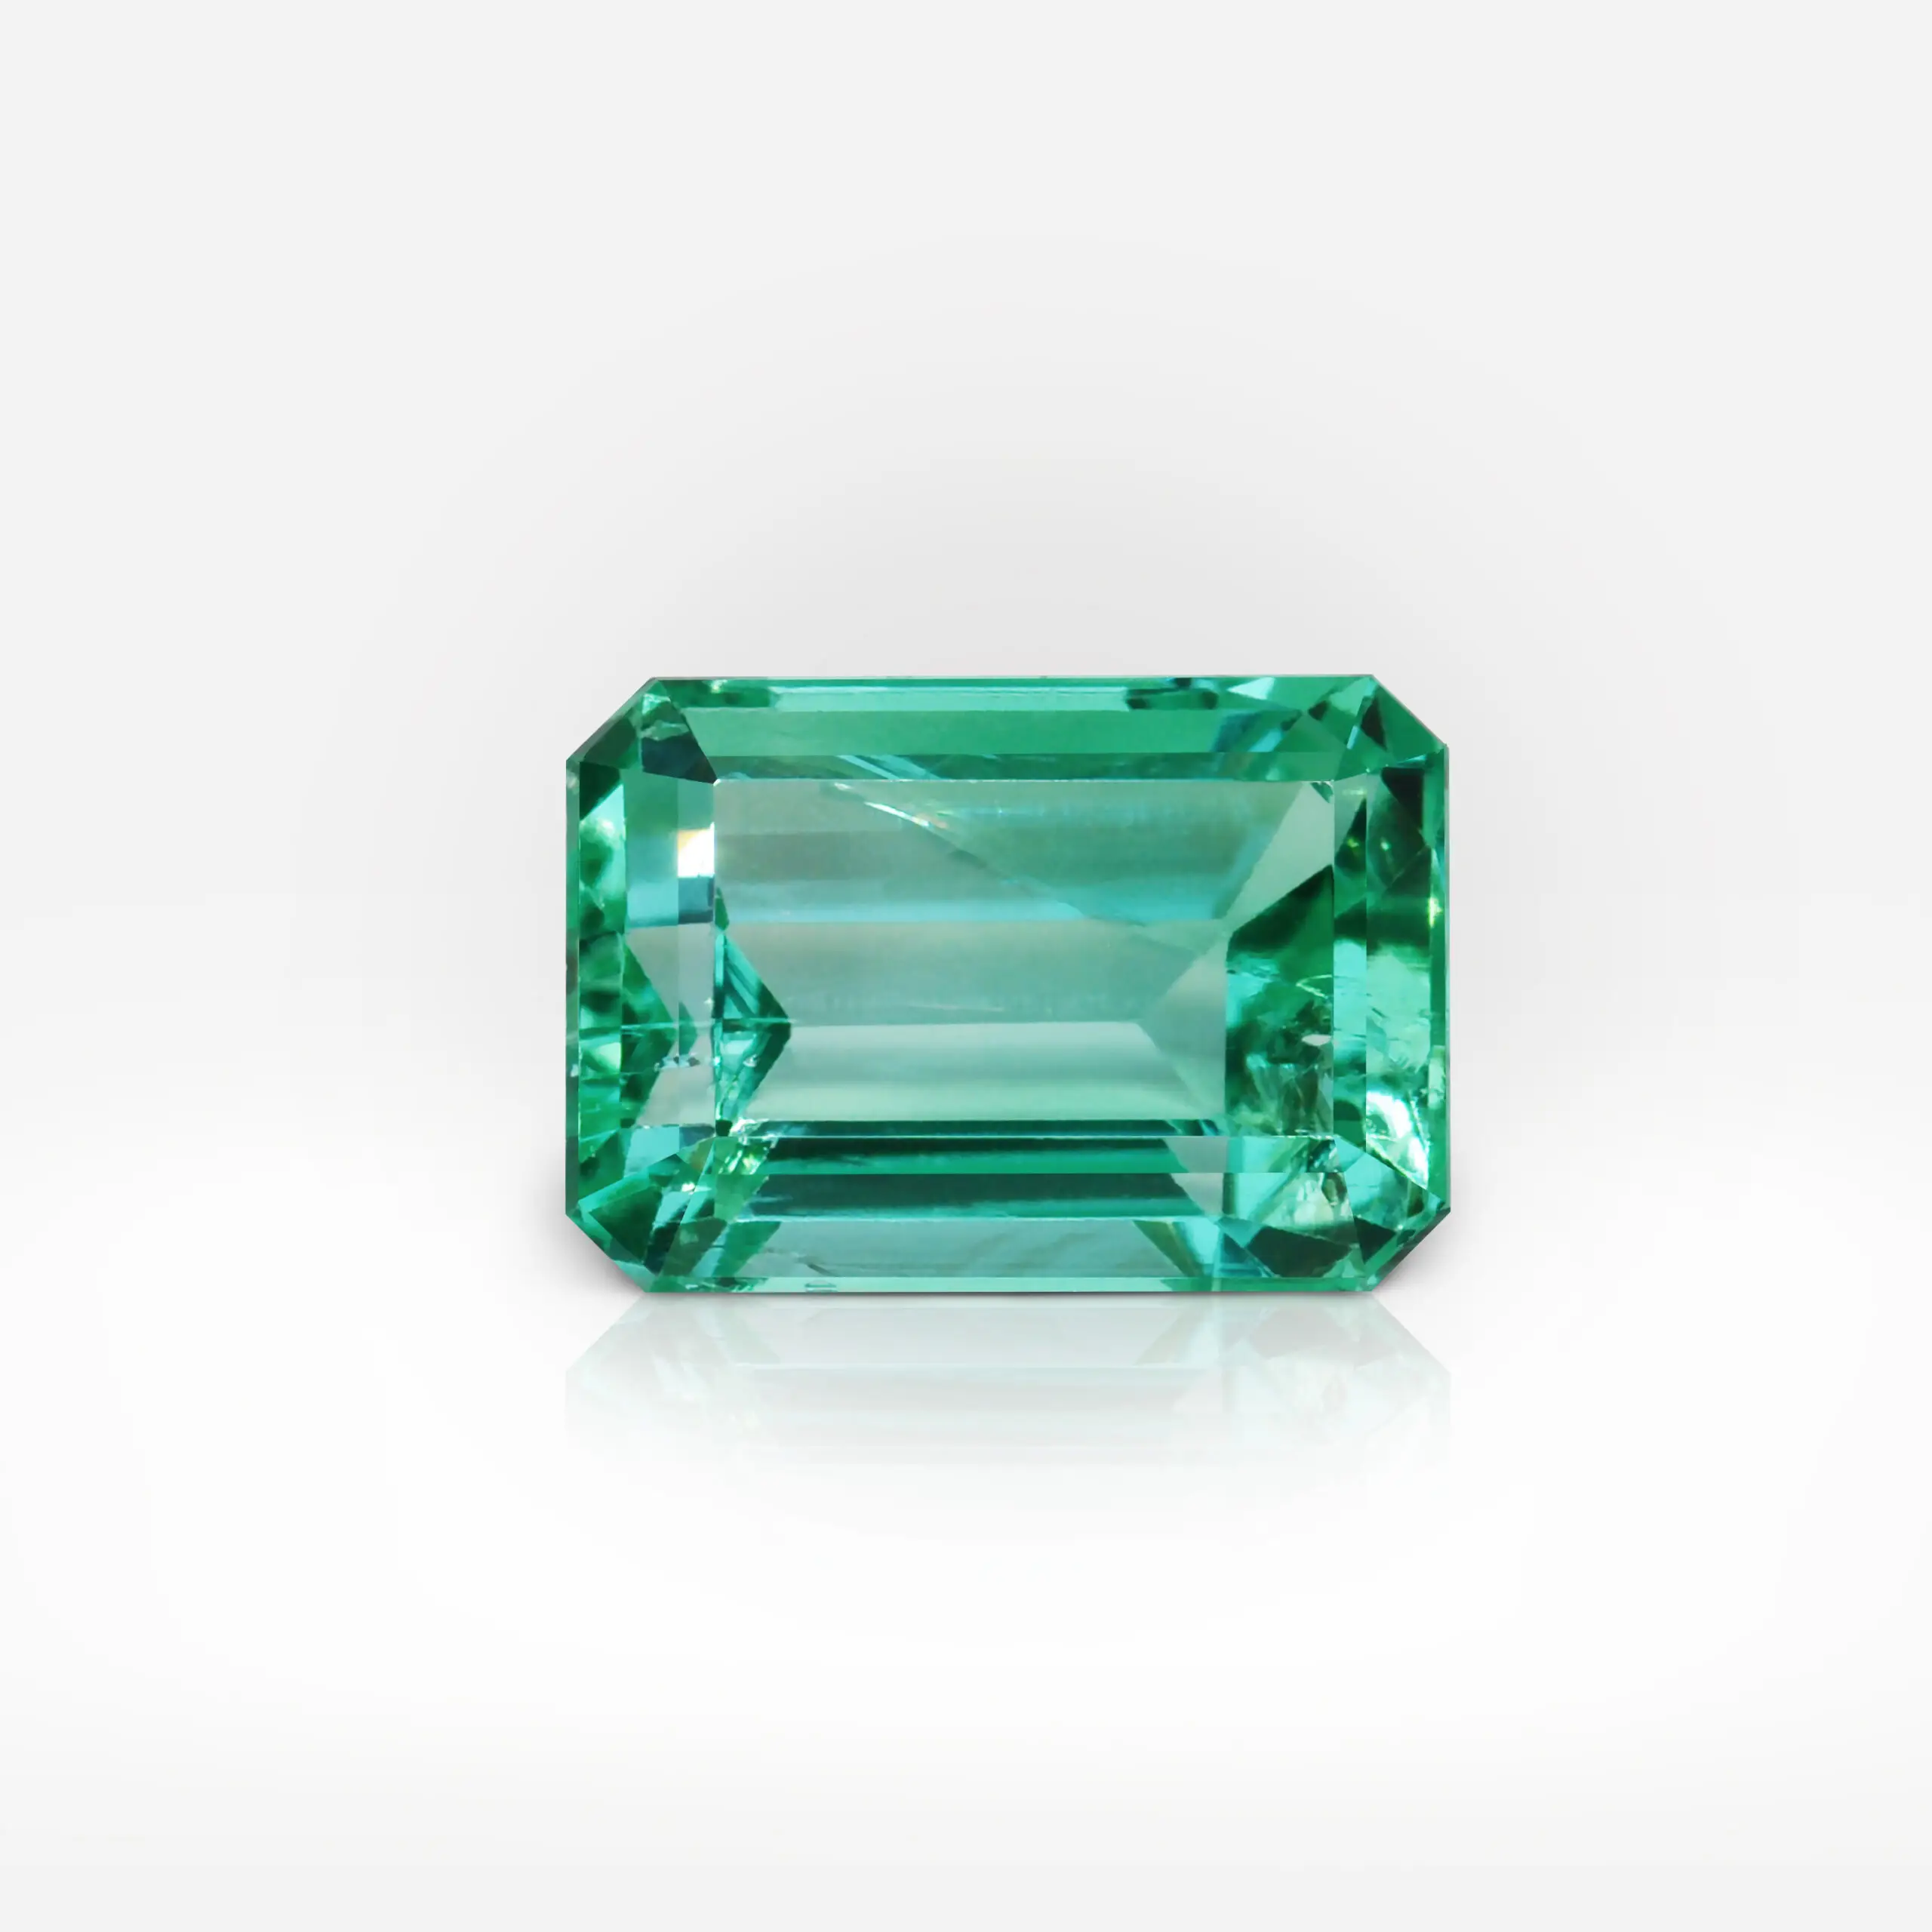 1.92 carat Octagonal Shape Intense Green Colombian Emerald ALGT - picture 1